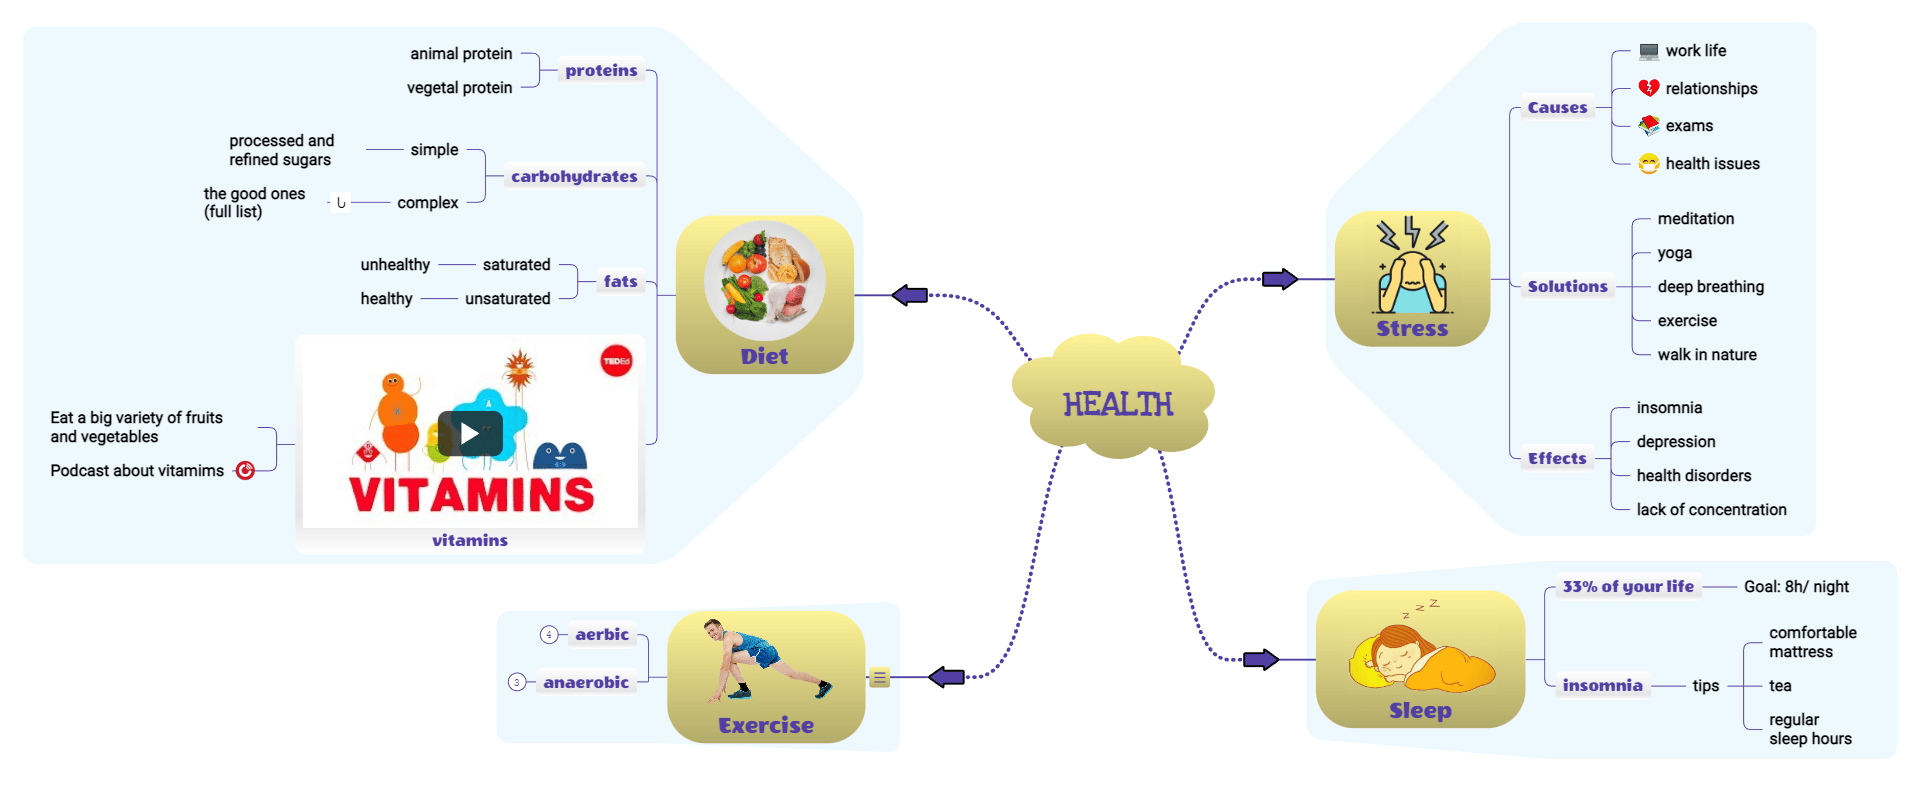 health digital mind map example